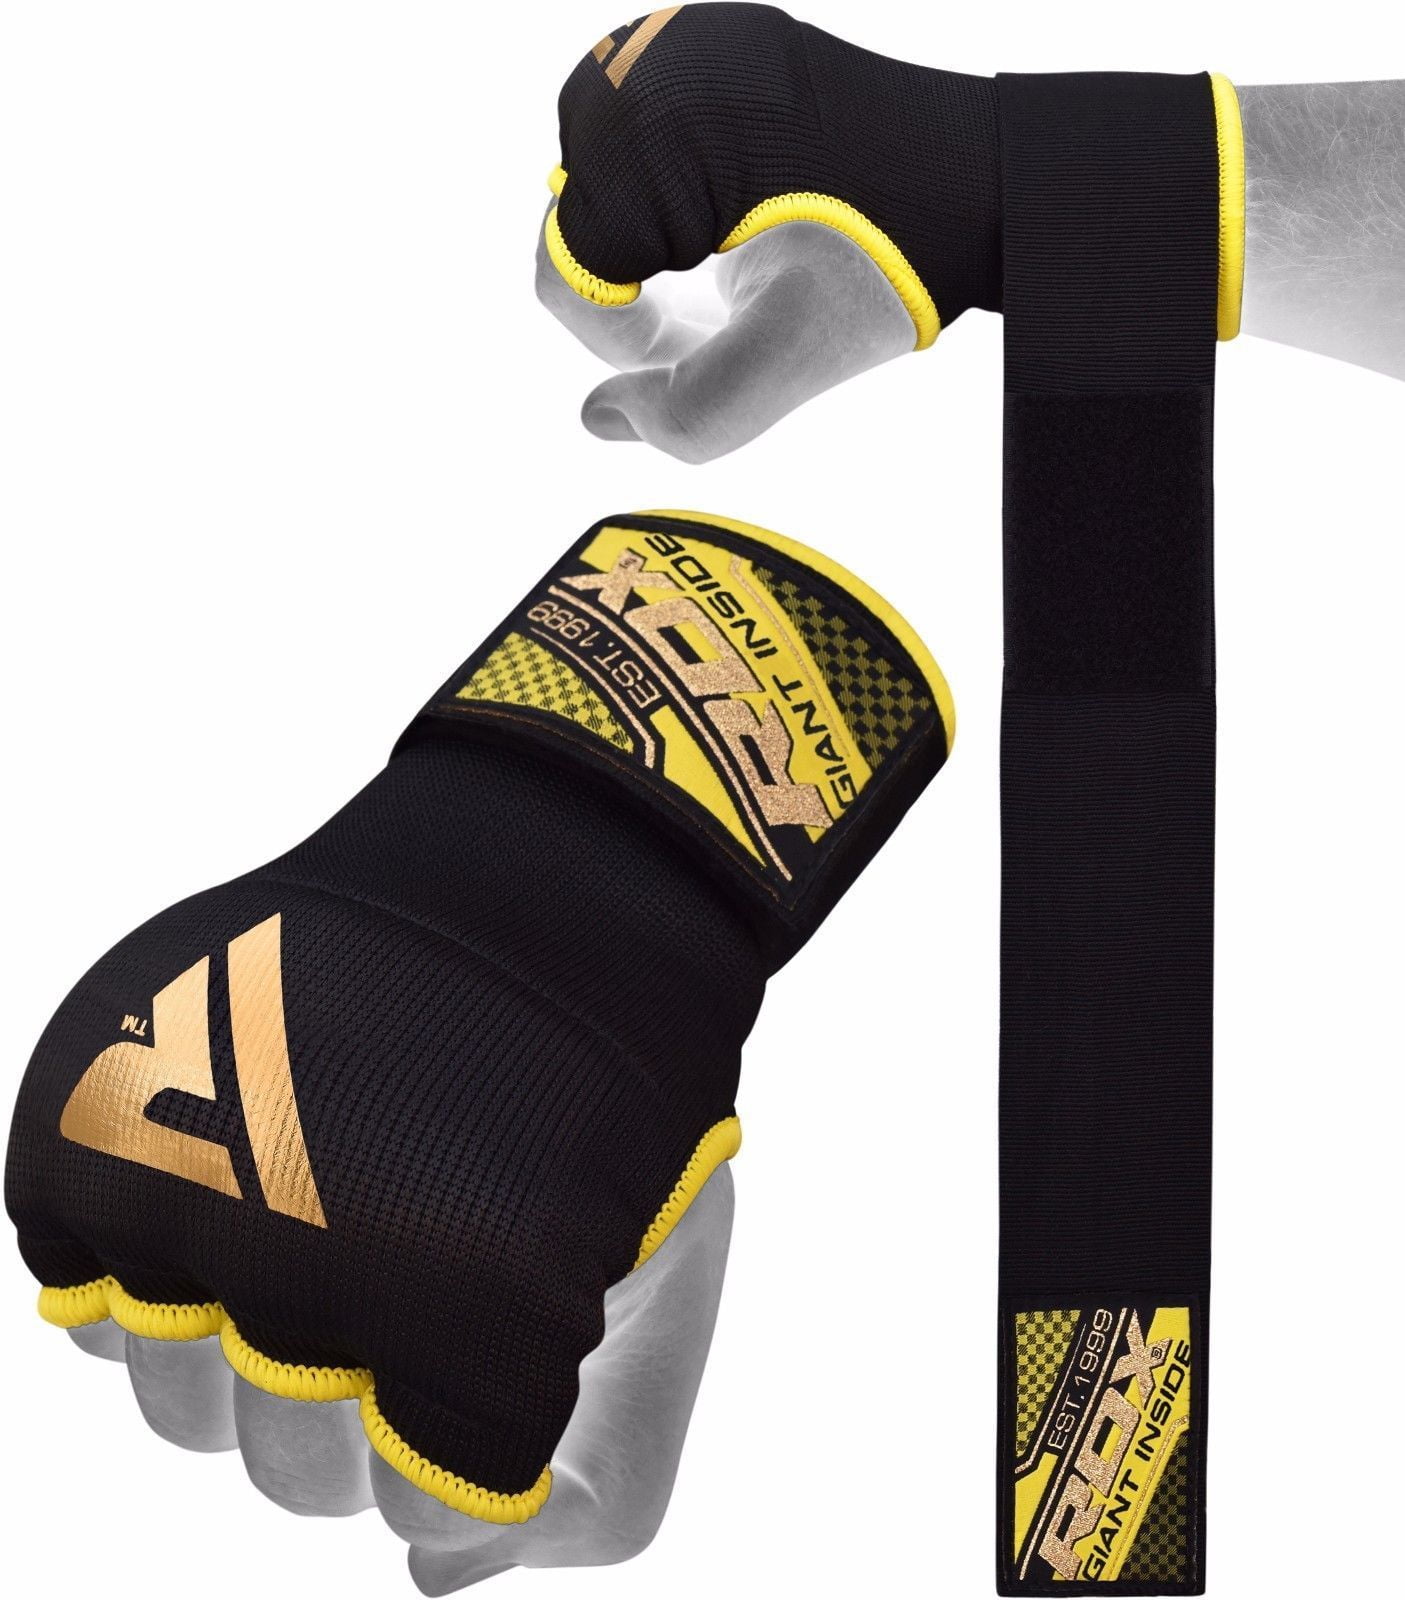 Repton Bandages Hand Wraps MMA Boxing Inner Gloves Mitt Protector MuayThai Kick 